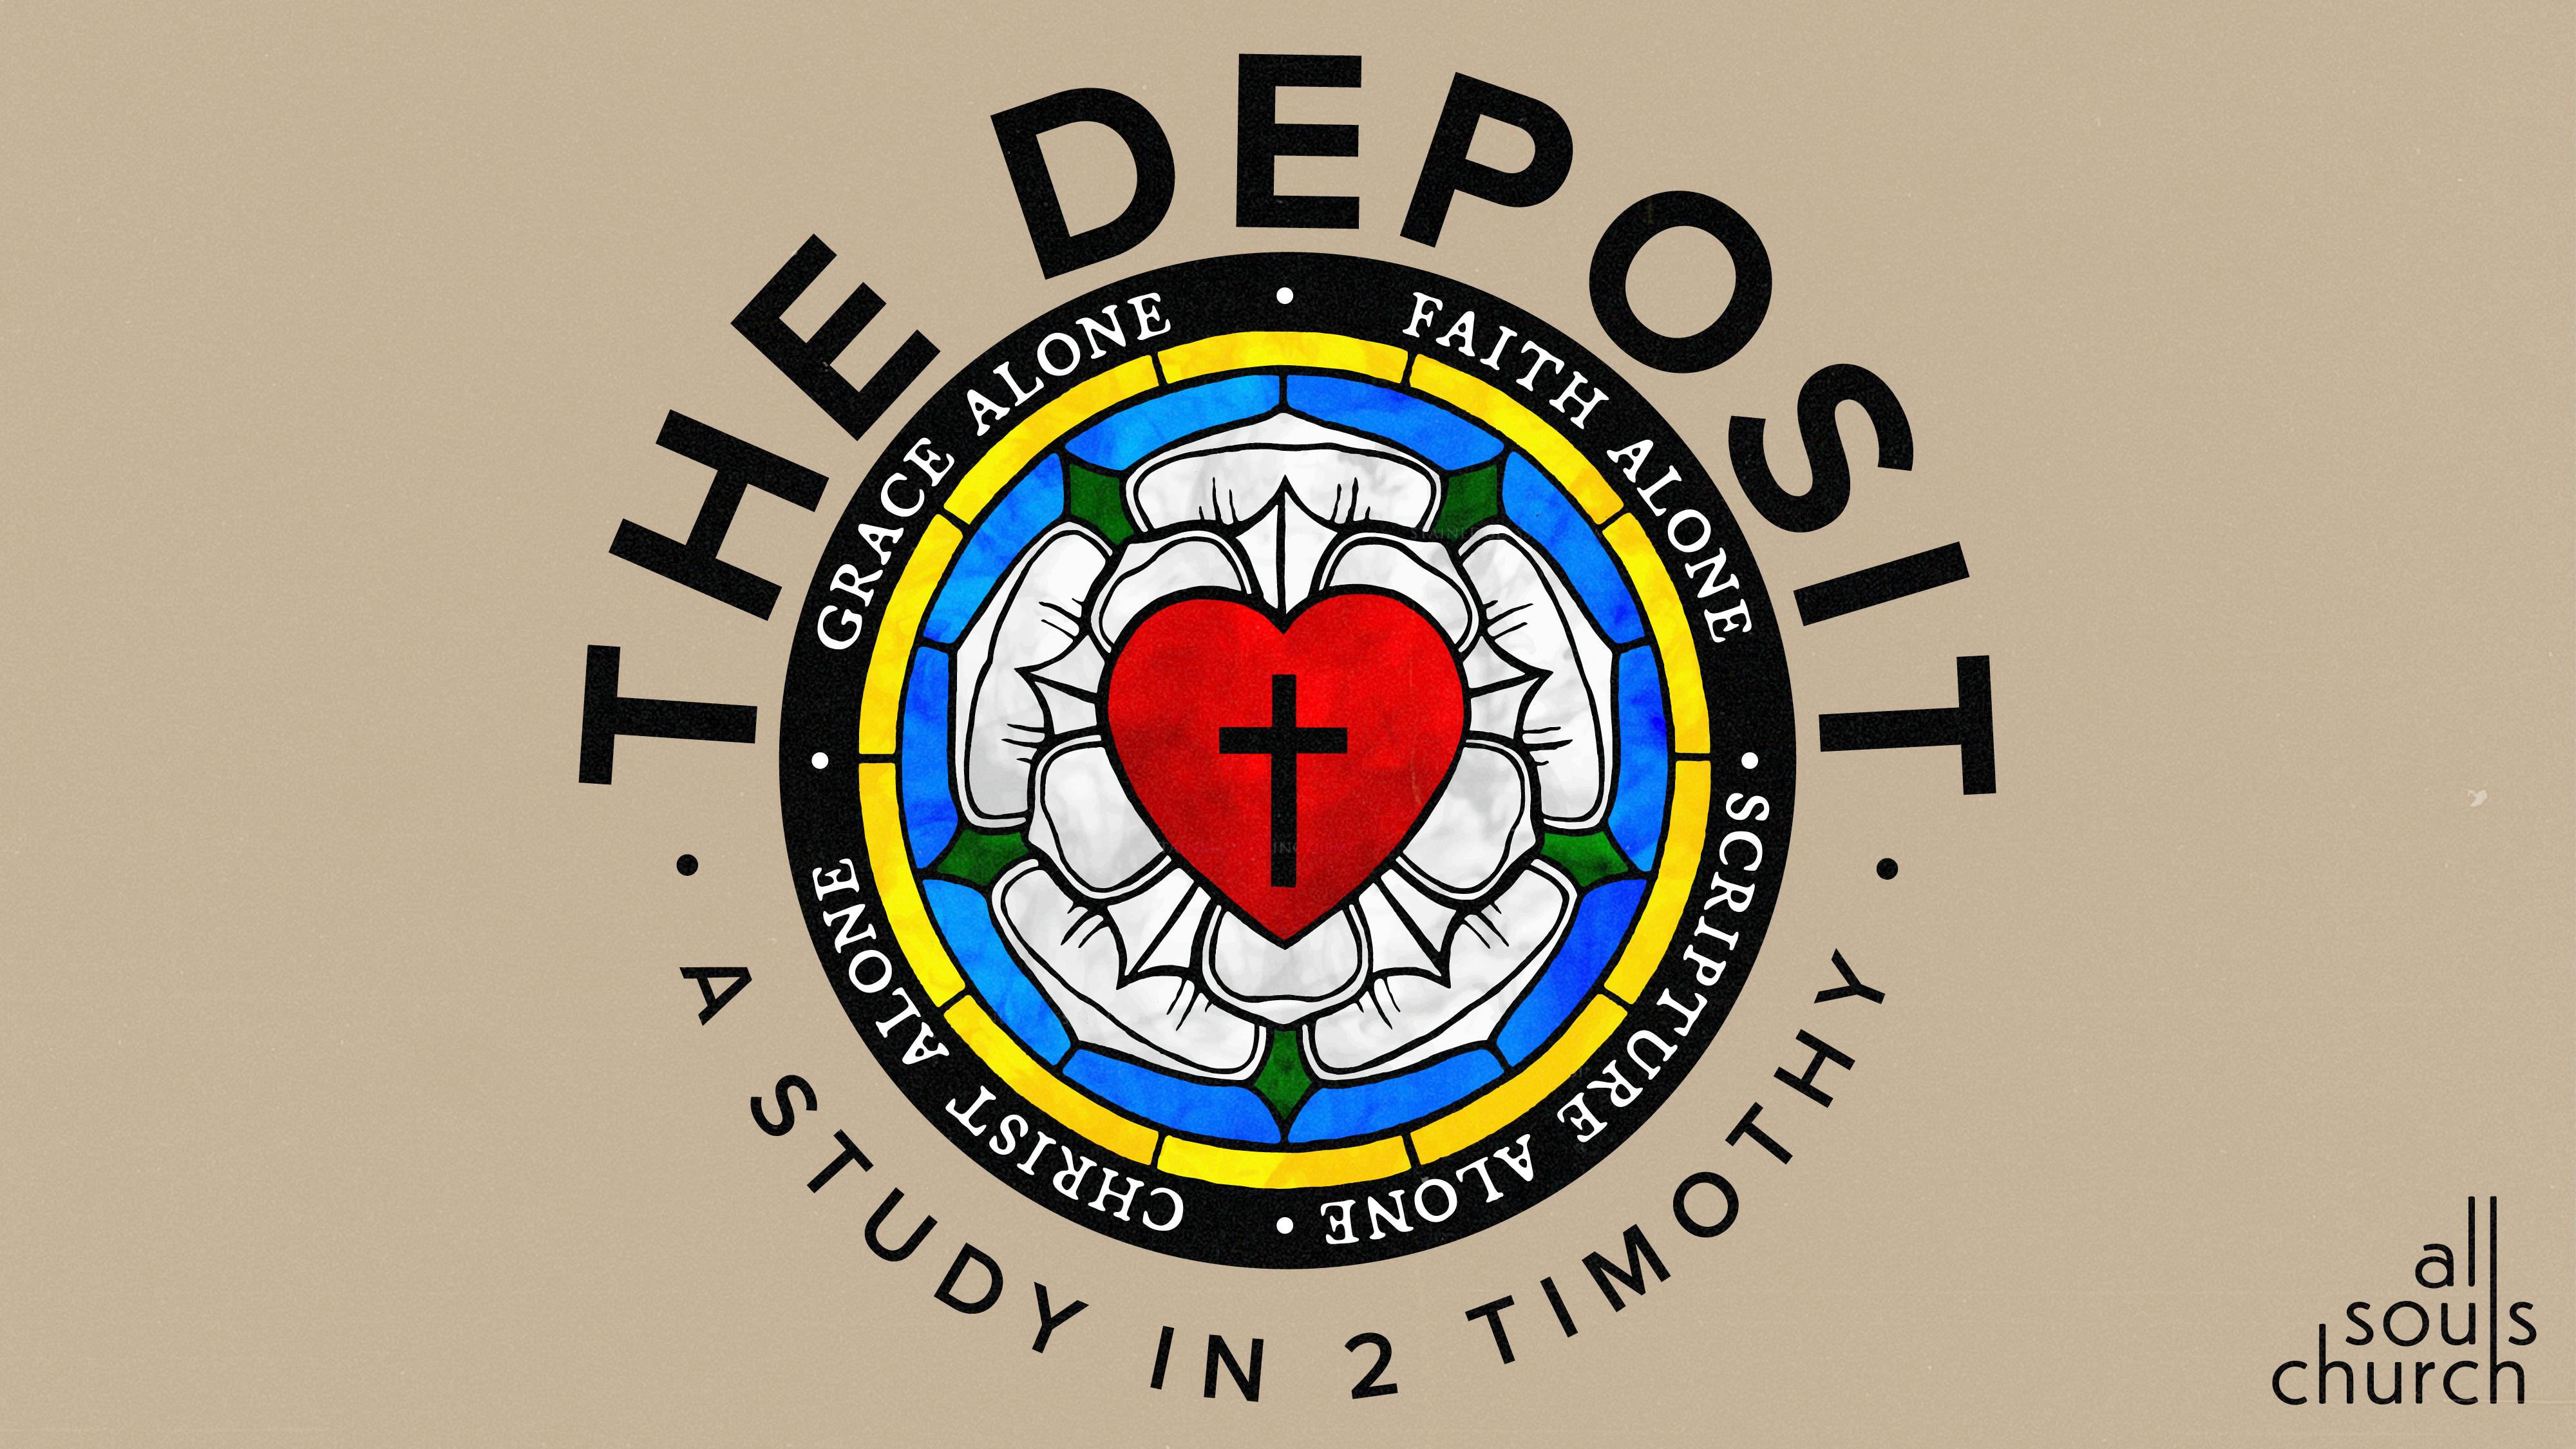 2 Timothy - The Deposit: False Teaching cover for post